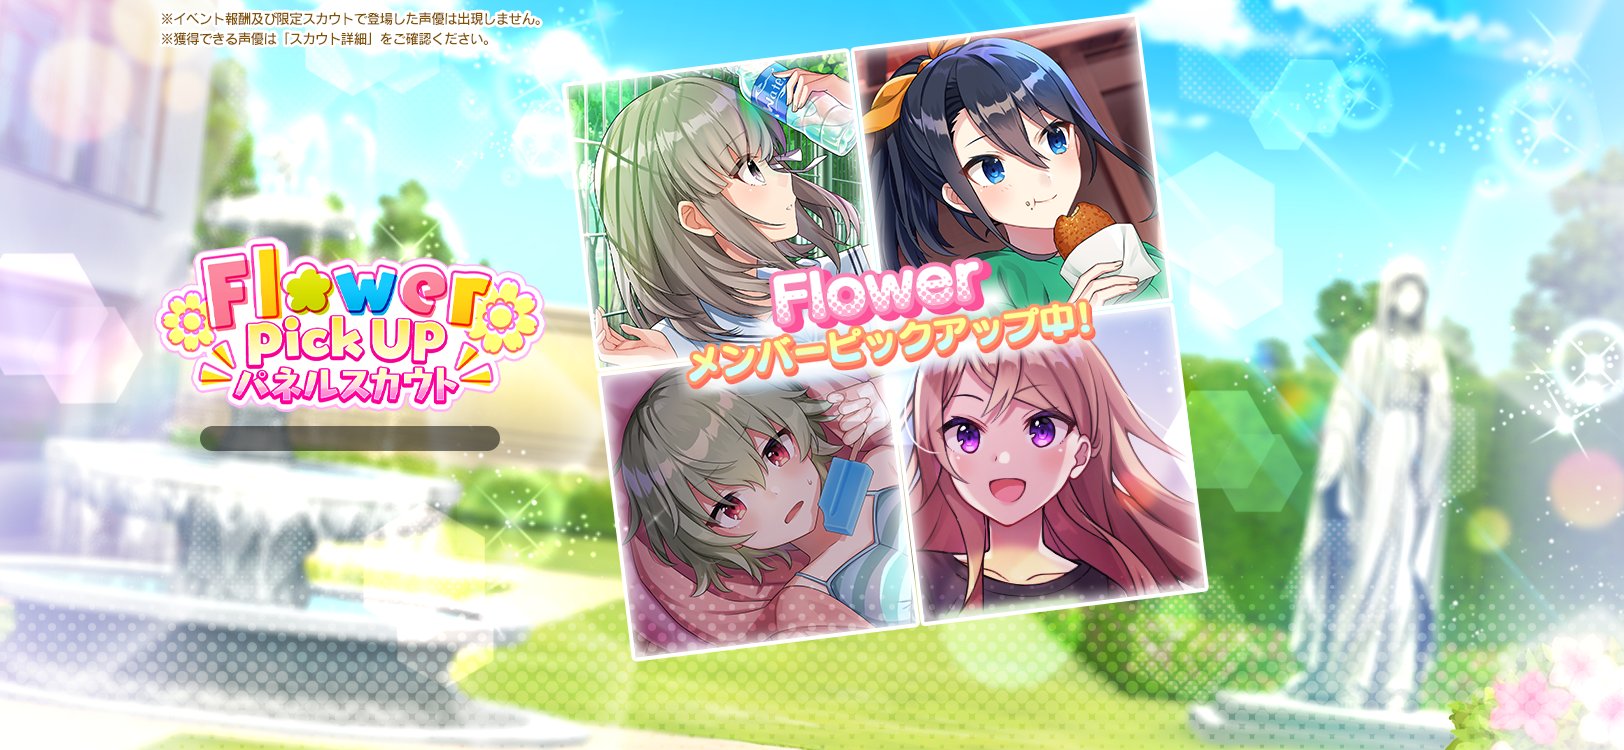 Flower PickUp 패널 스카우트 20201009.jpeg